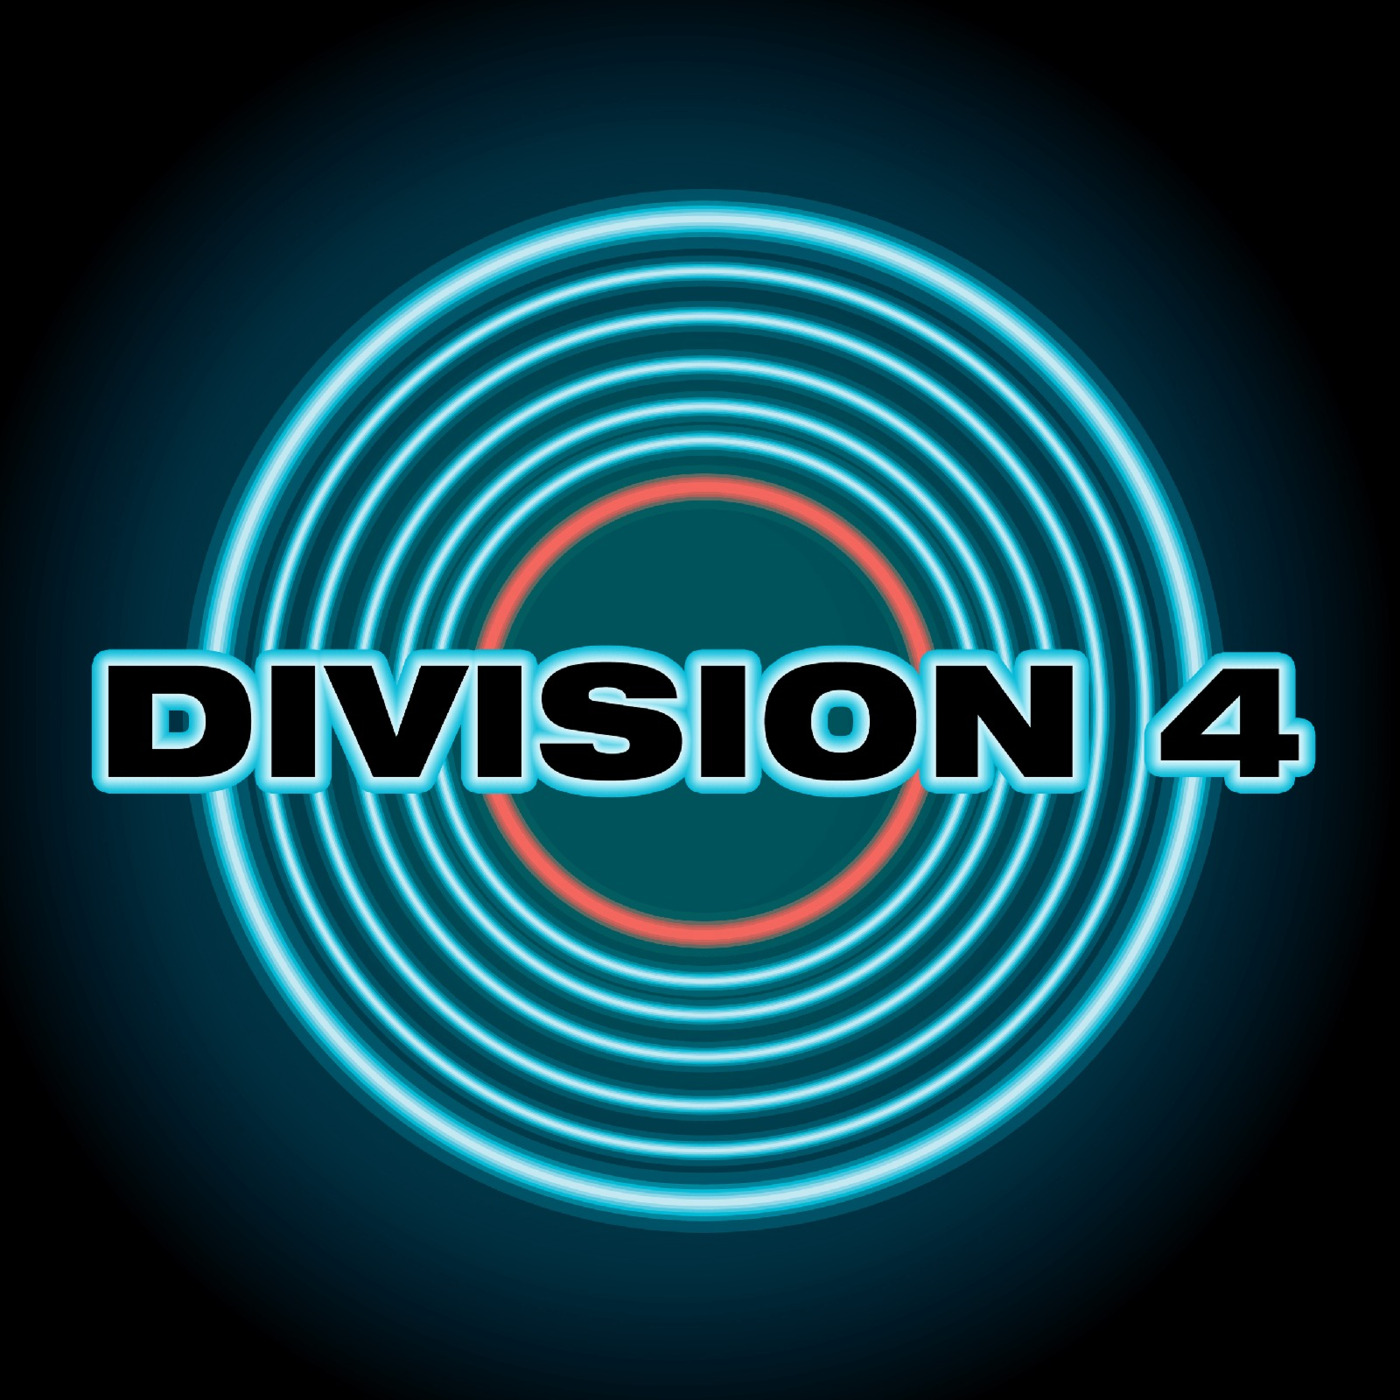 Division 4 presents Transonic Sounds